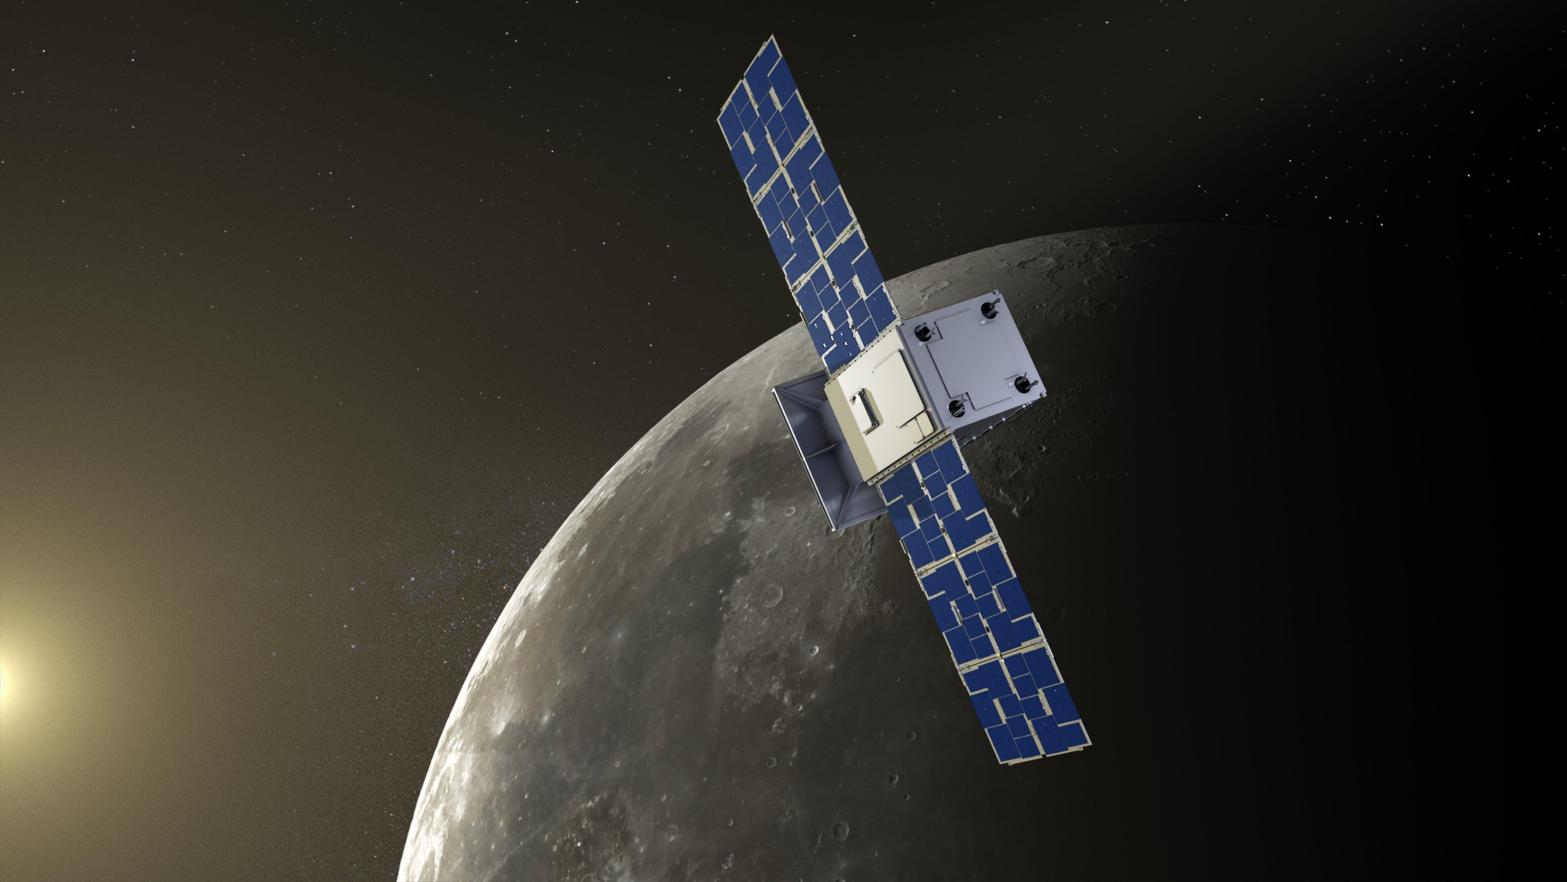 An illustration of the CAPSTONE spacecraft during its elliptical orbit around the Moon. (Illustration: NASA)